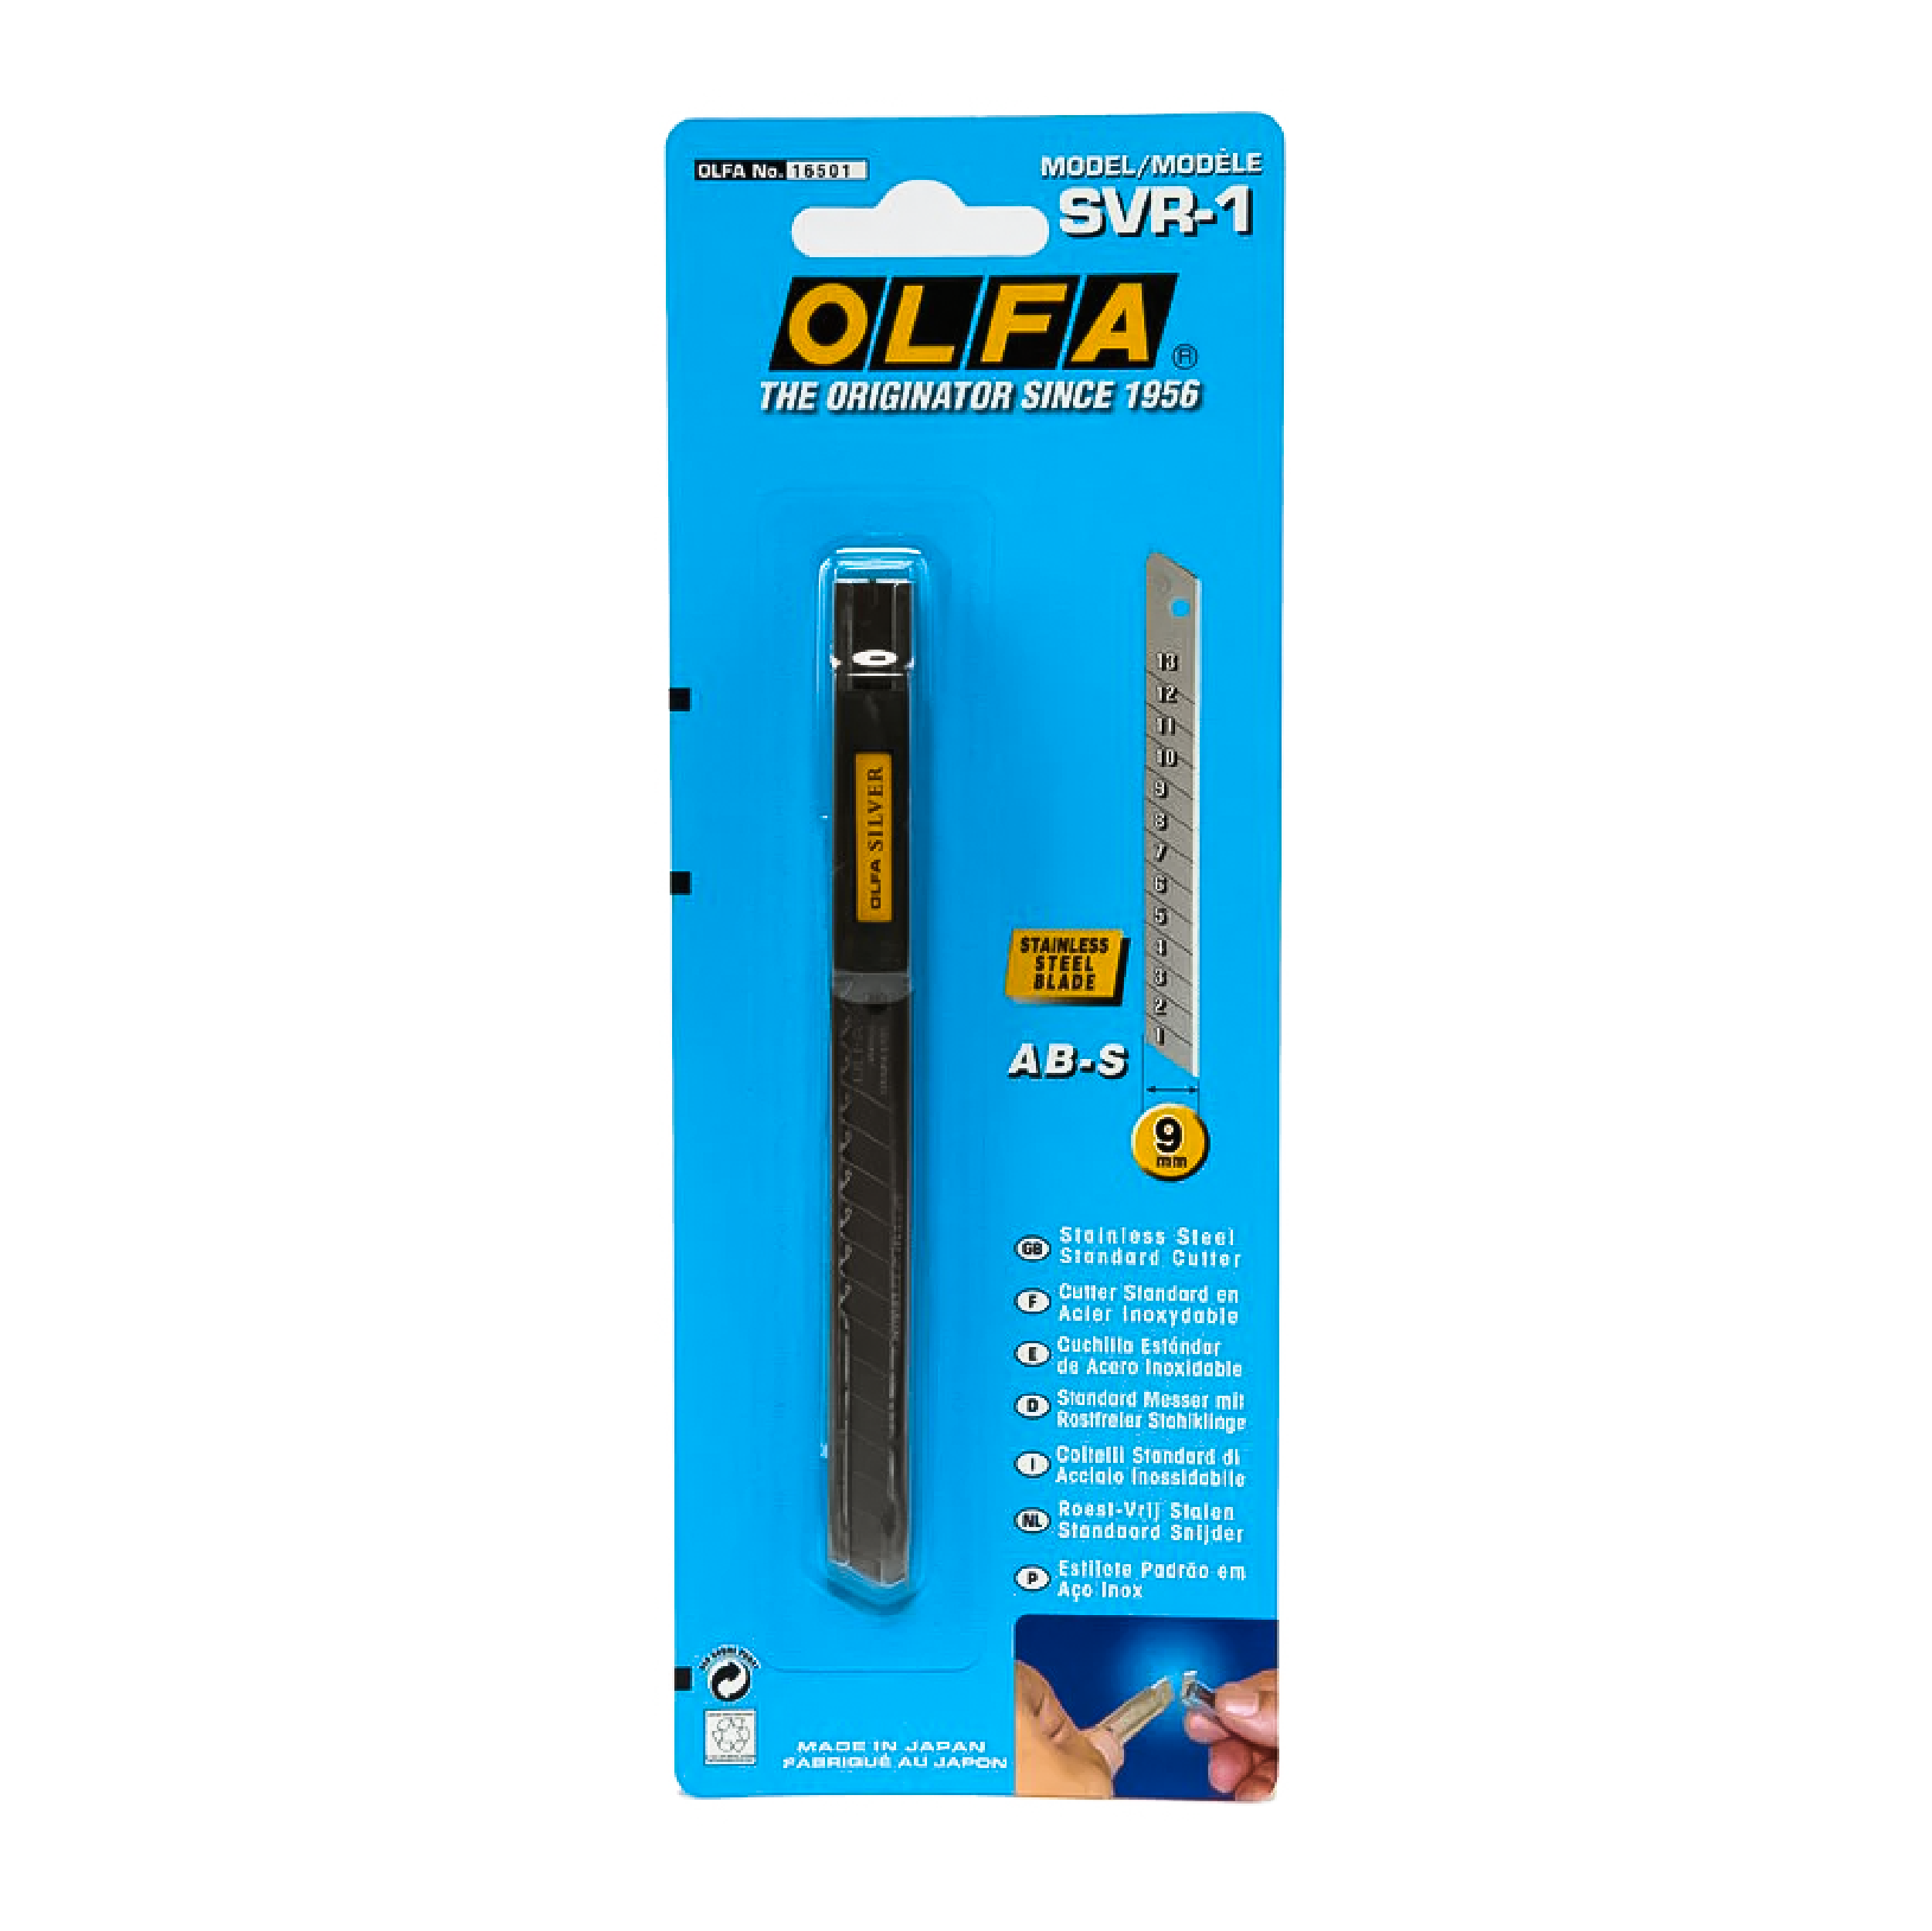 OLFA Standard Cutter, 9mm (SVR-1)